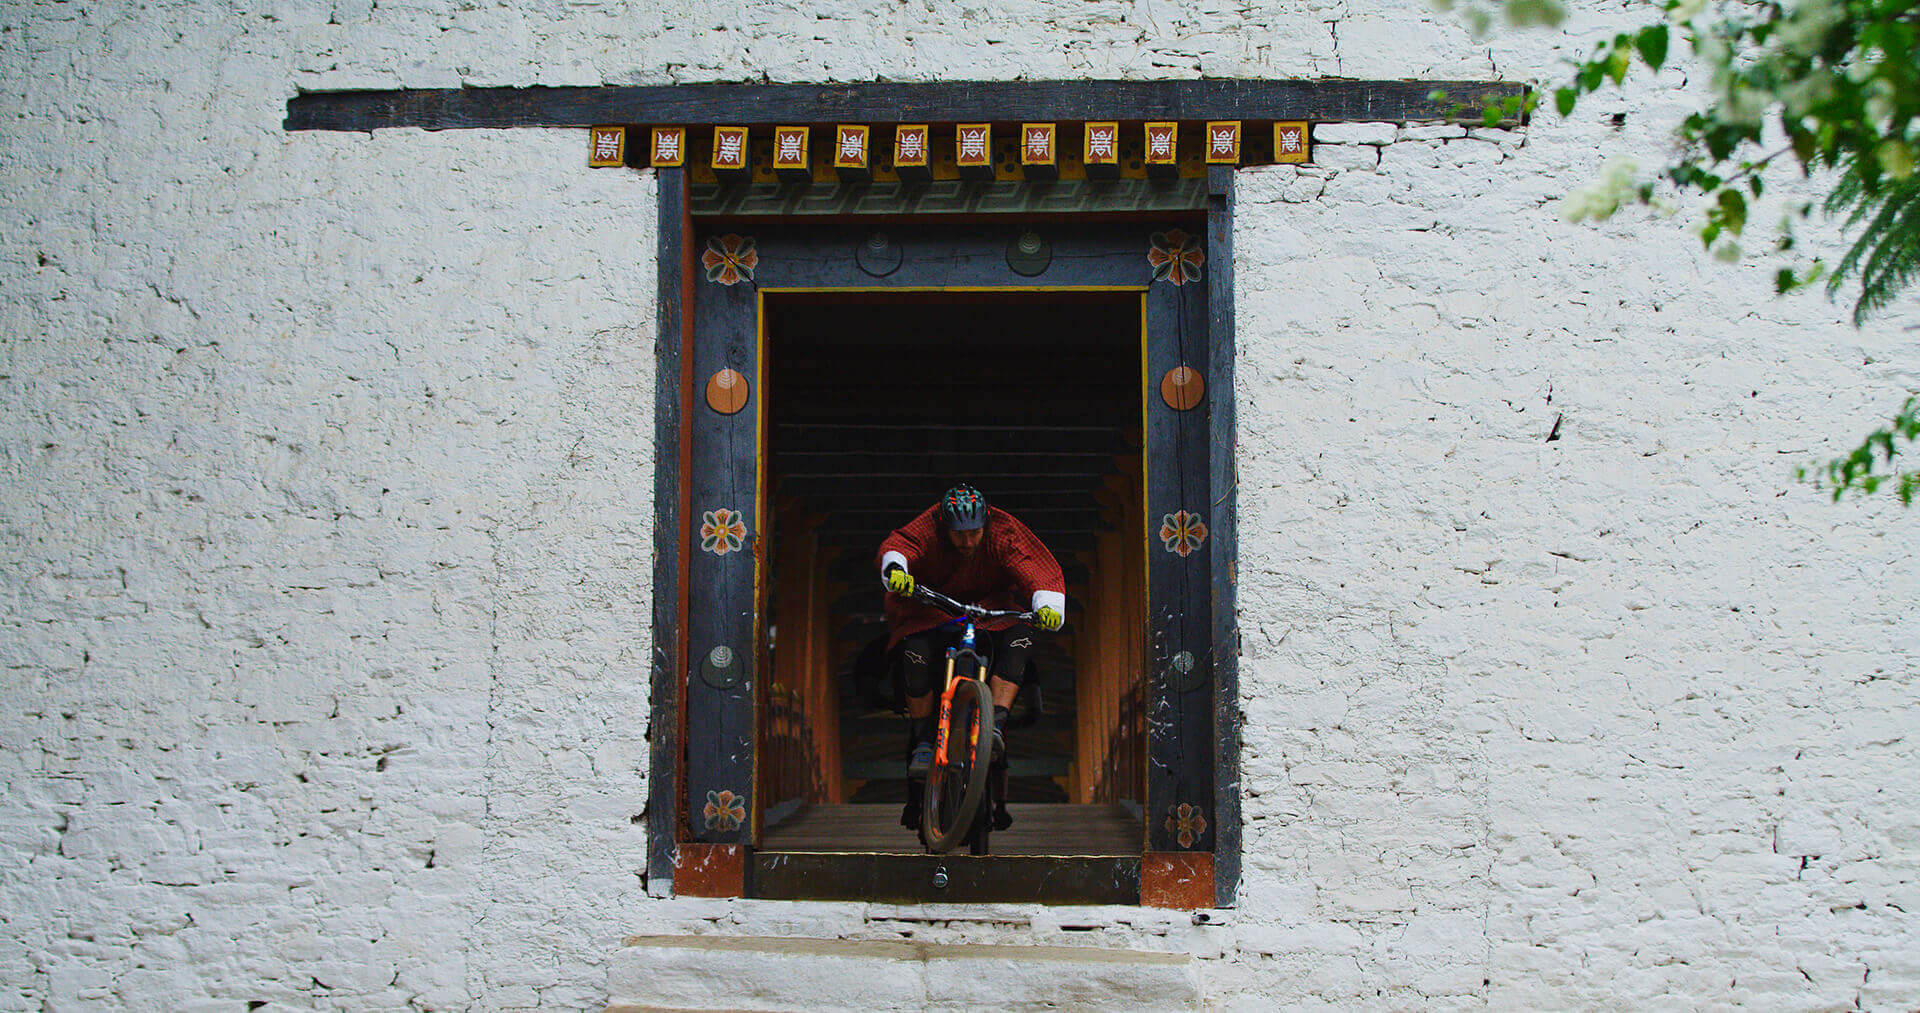 Must Watch Masterpiece | Madman Trails Of Bhutan